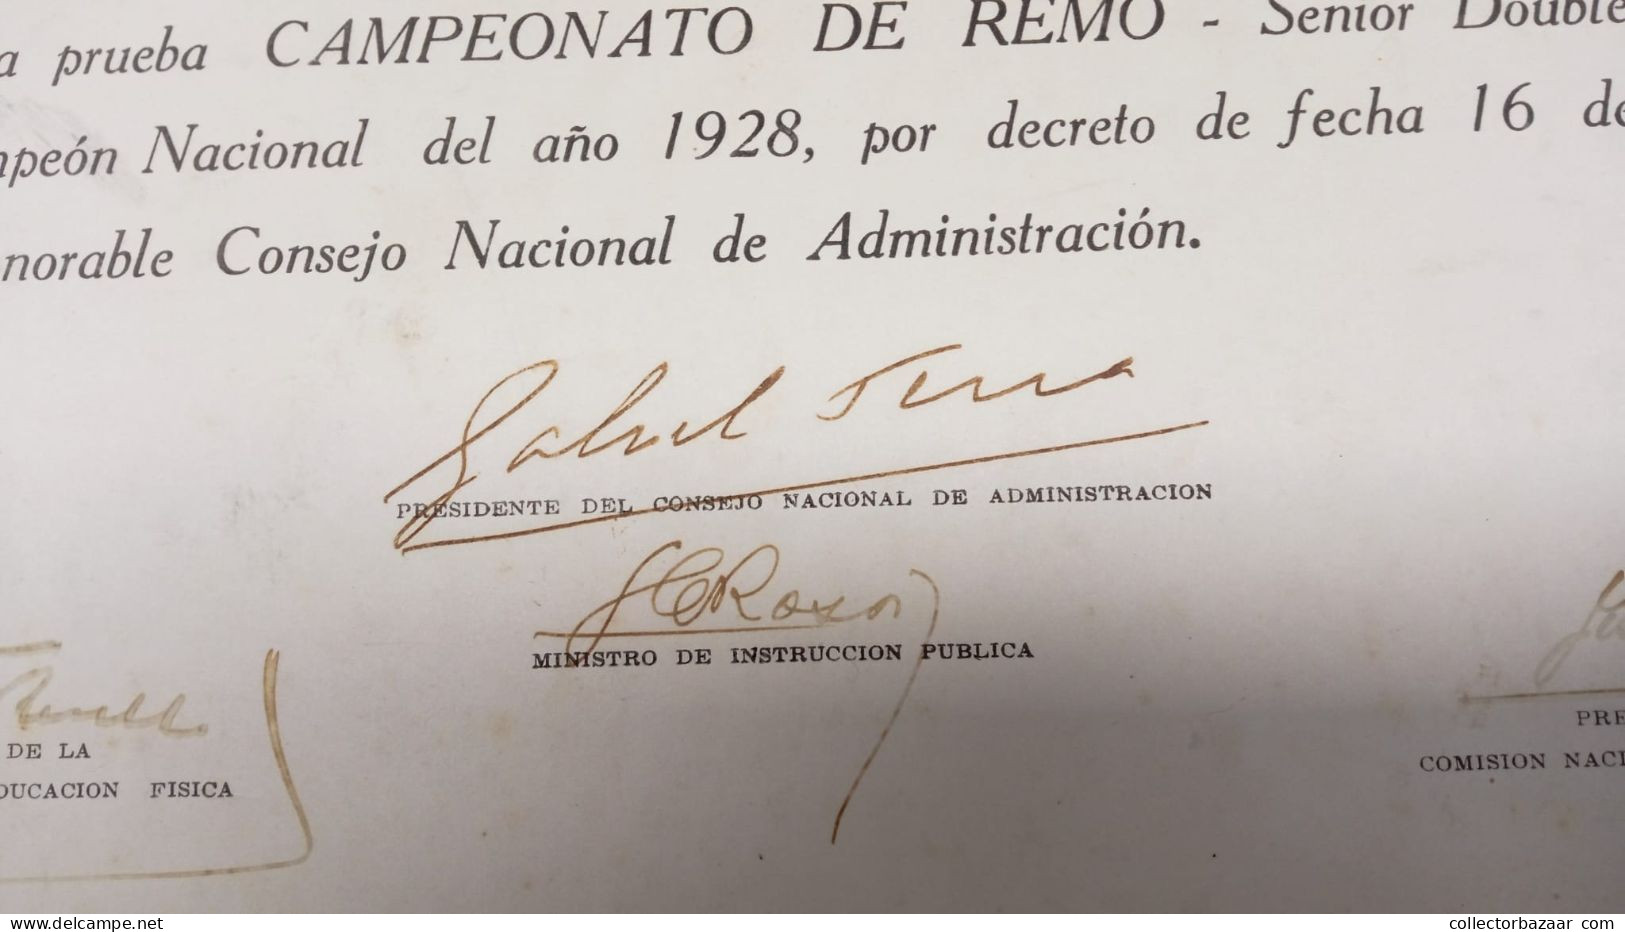 1926 - 1930 Uruguay National Rowing Champion 4 Diplomas With President Of Republic Autographs Brum Terra Serrato Nice - Rowing